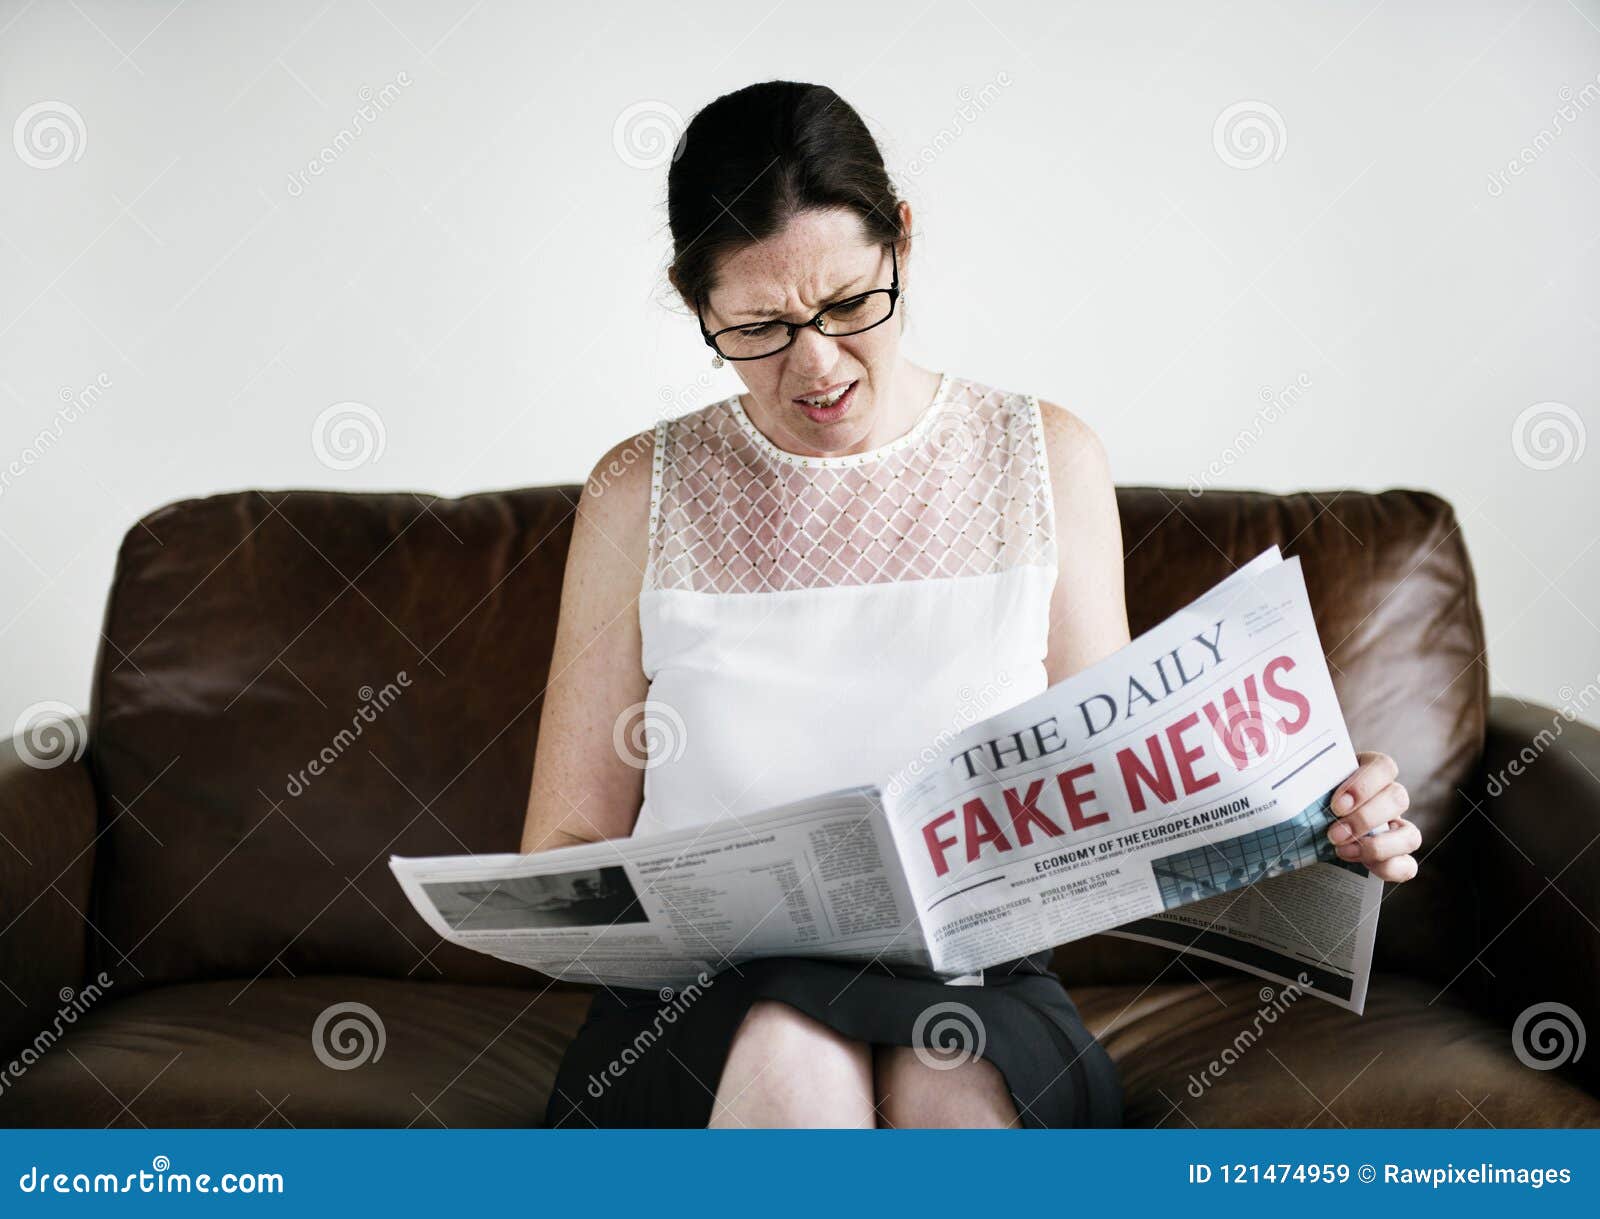 a woman reading fake news